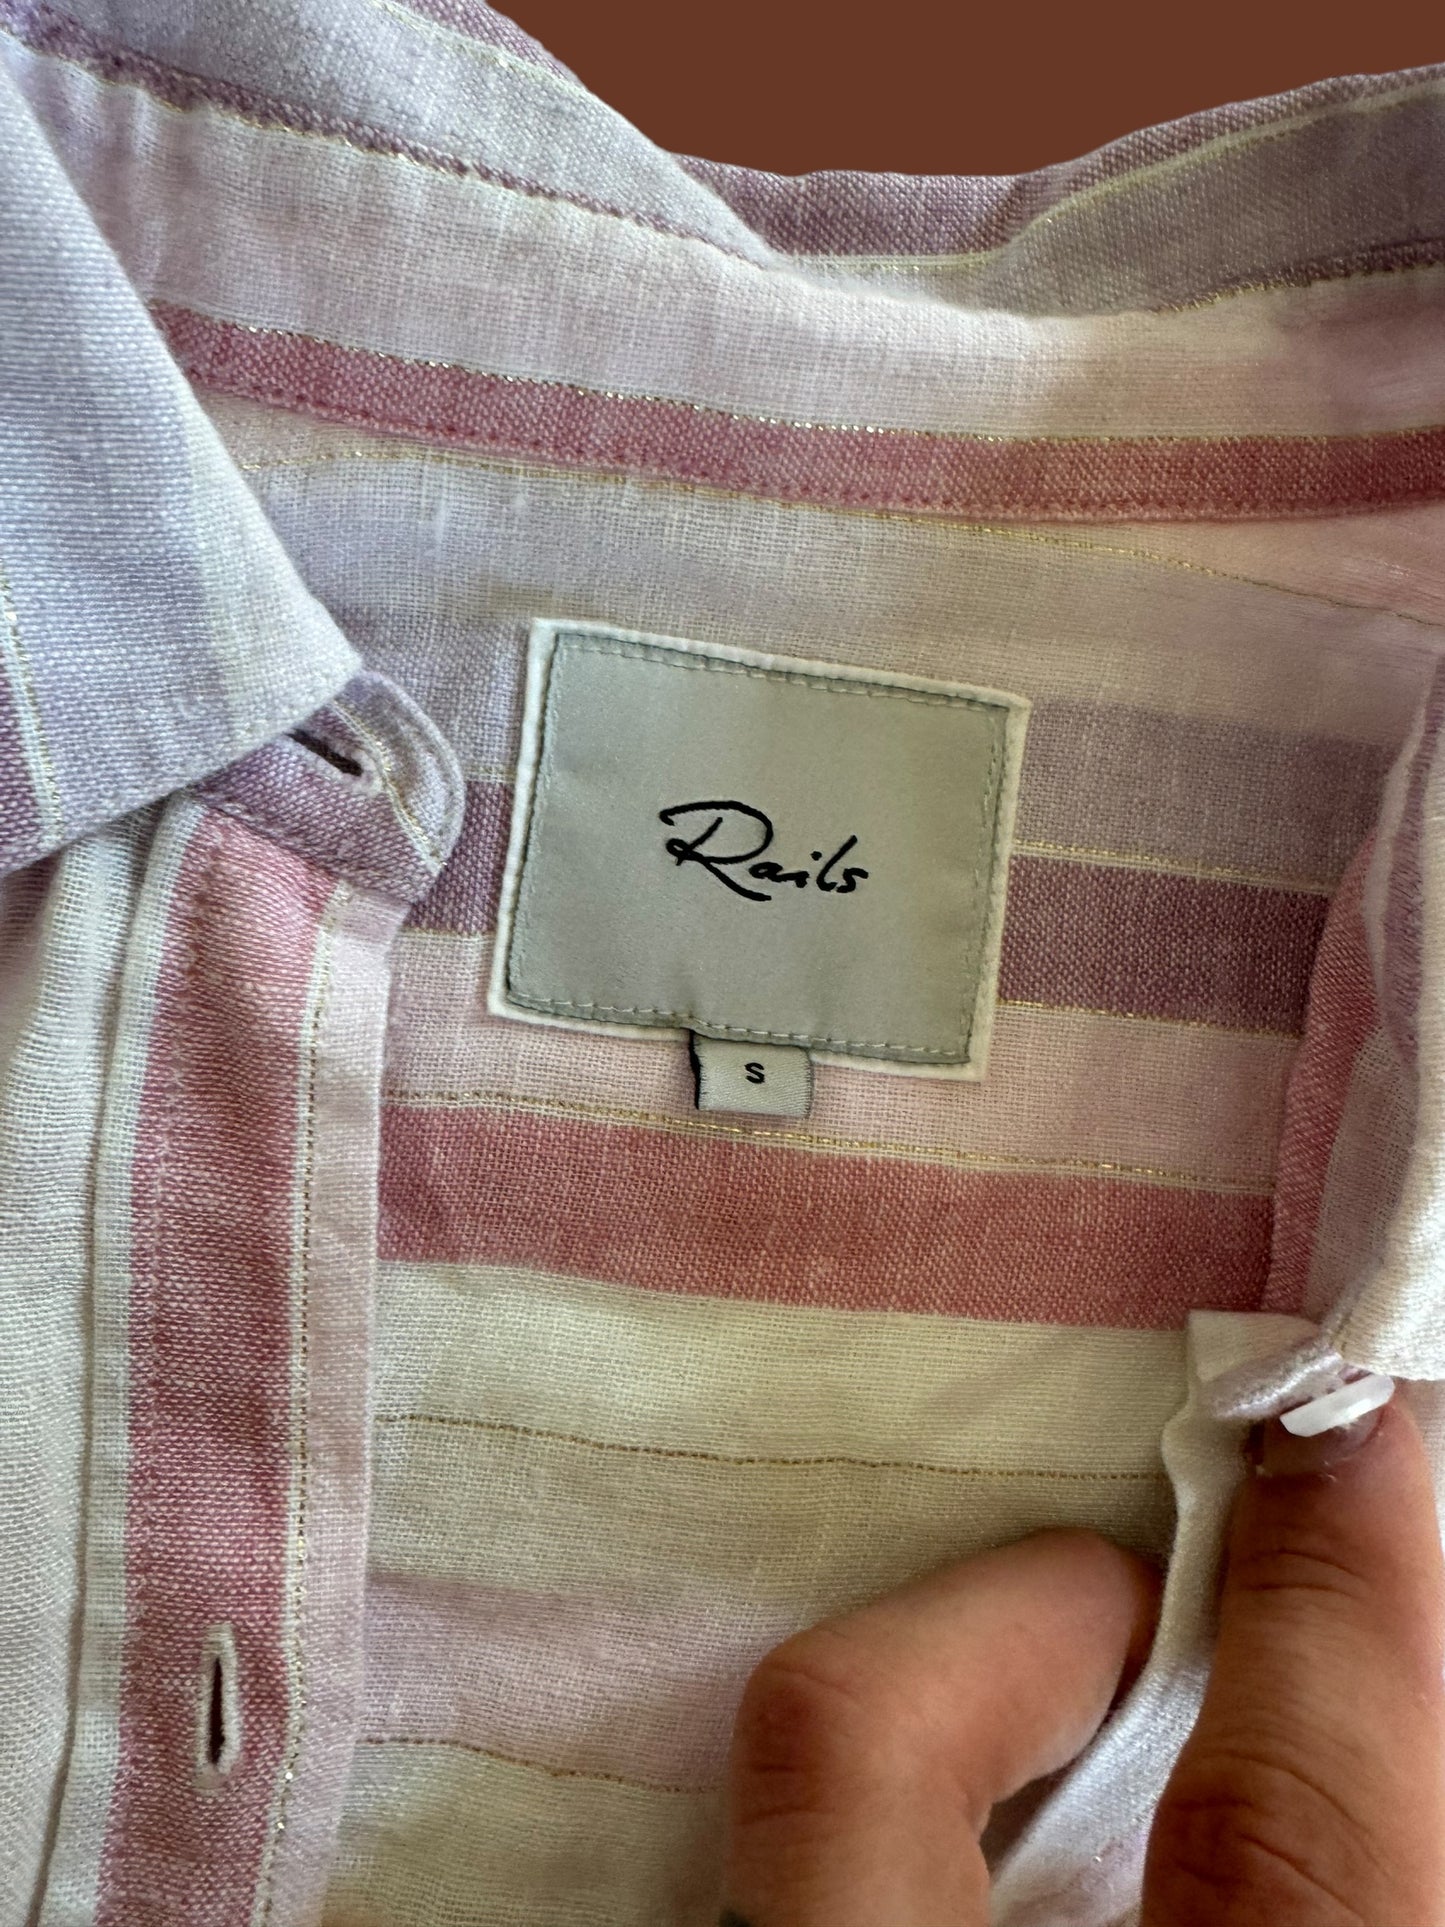 RAILS striped shirt size small